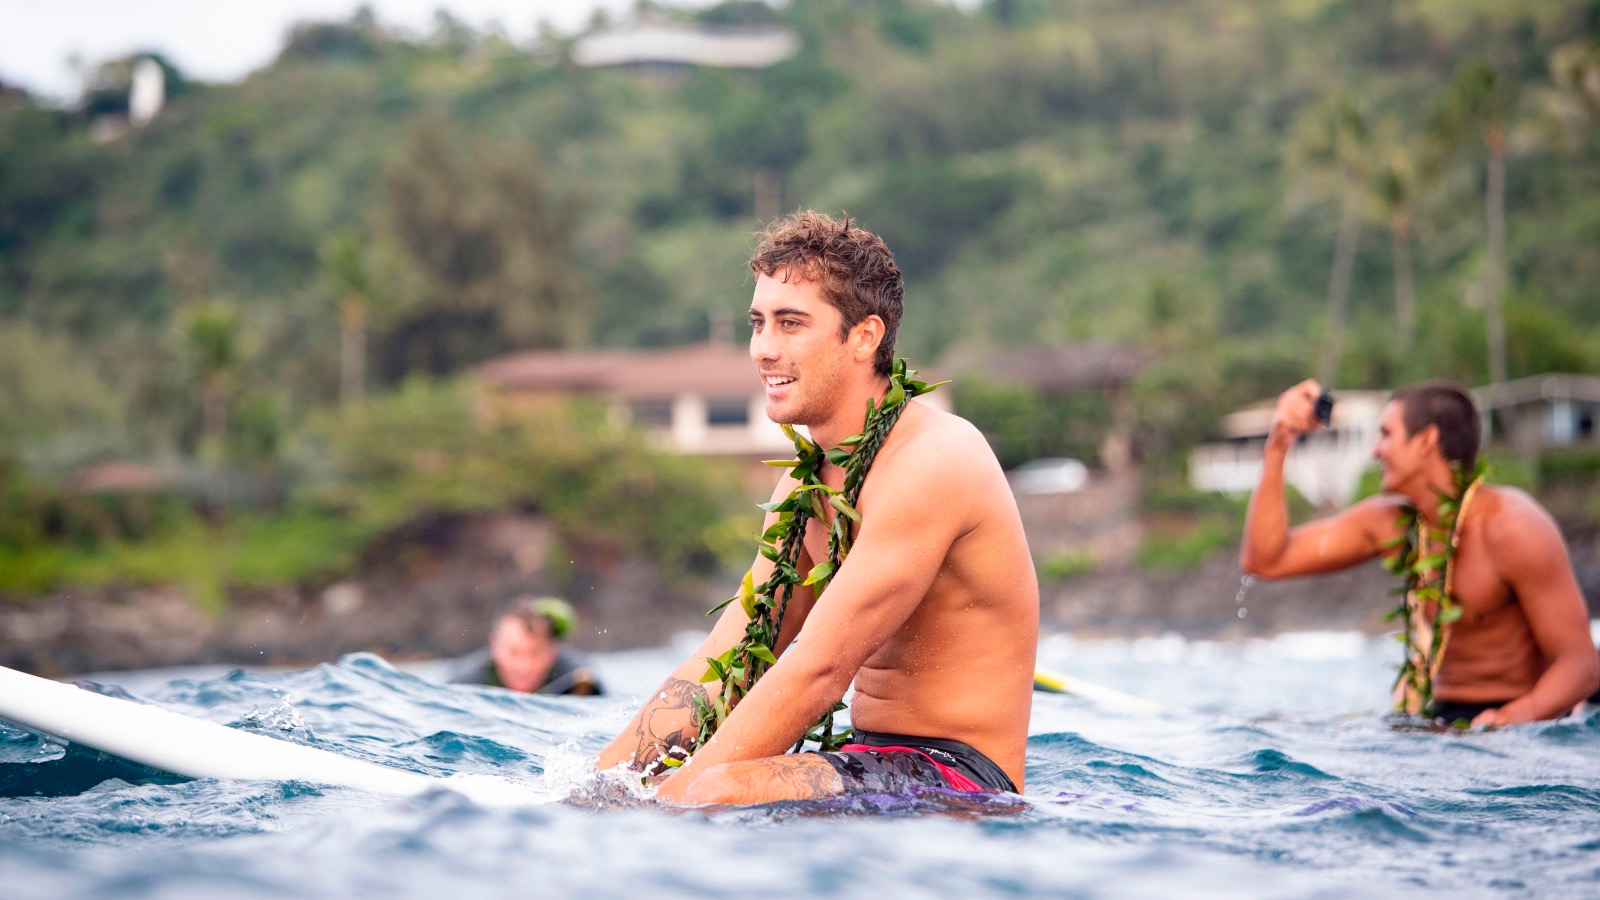 Koa Rothman Tandem Surfs Waikiki With His Model GF And Turtle